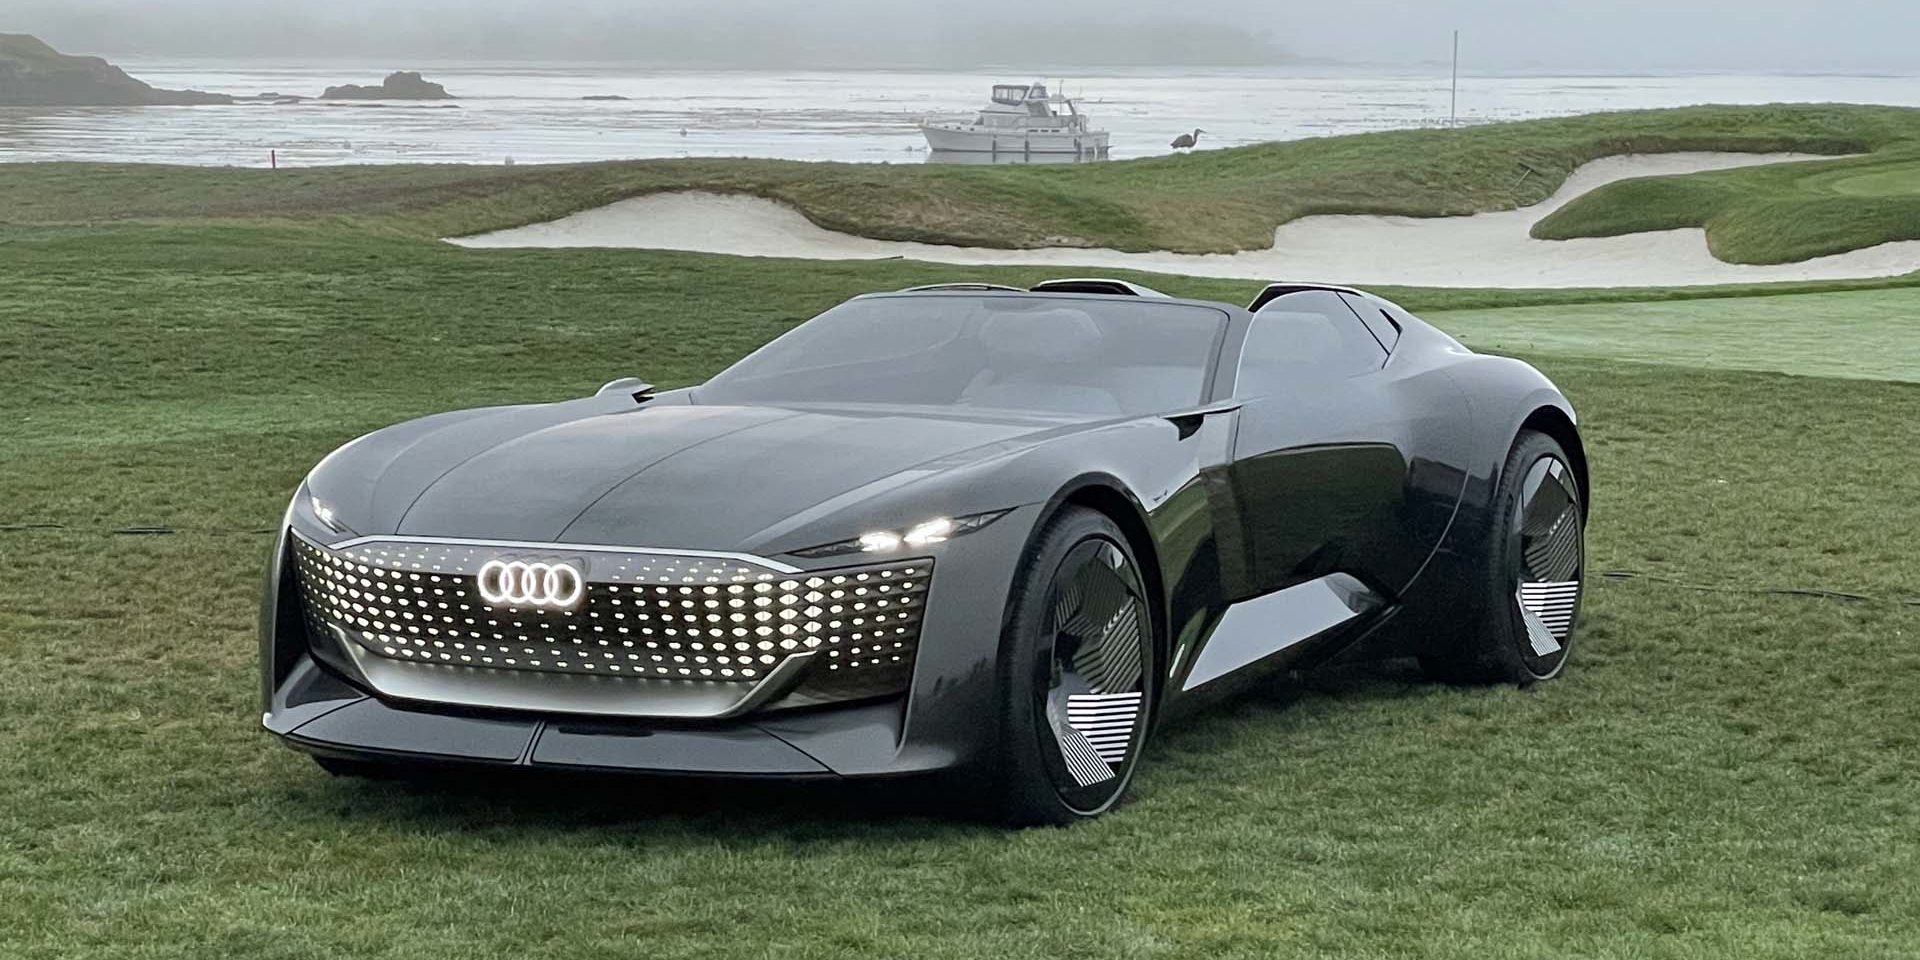 Audi skysphere concept at the Pebble Beach Concours d'Elegance / Graeme Fletcher, The Charge